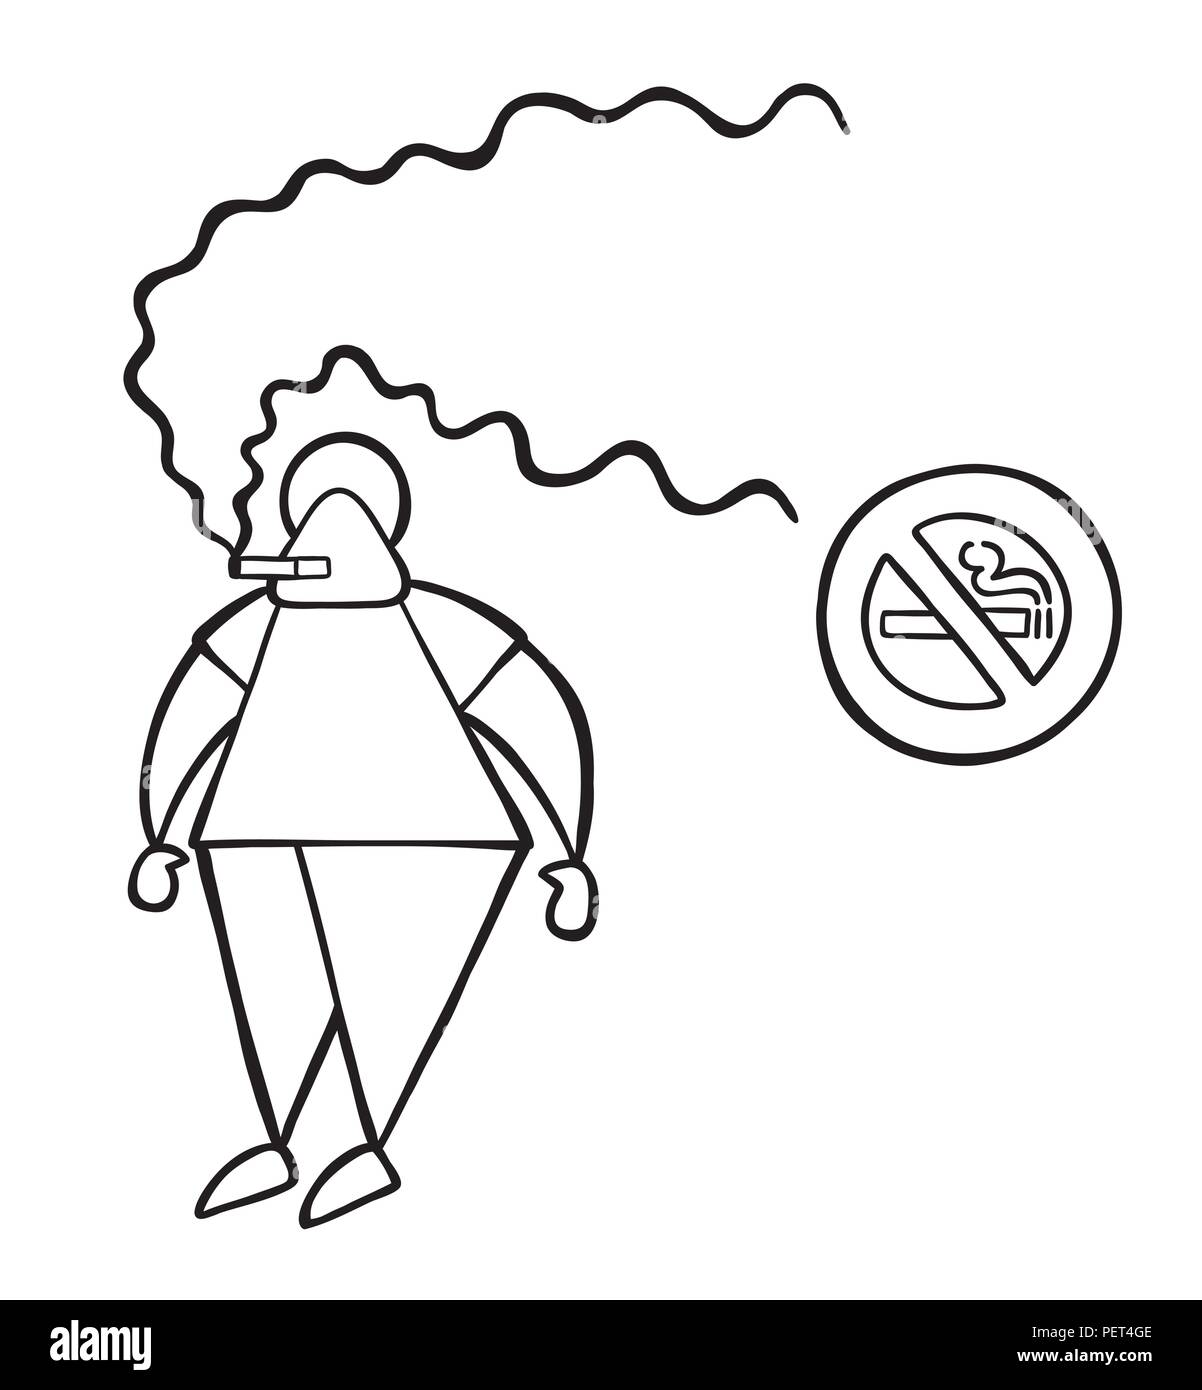 Vector Illustration cartoon mann Charakter rauchen Zigarette neben no smoking sign. Stock Vektor